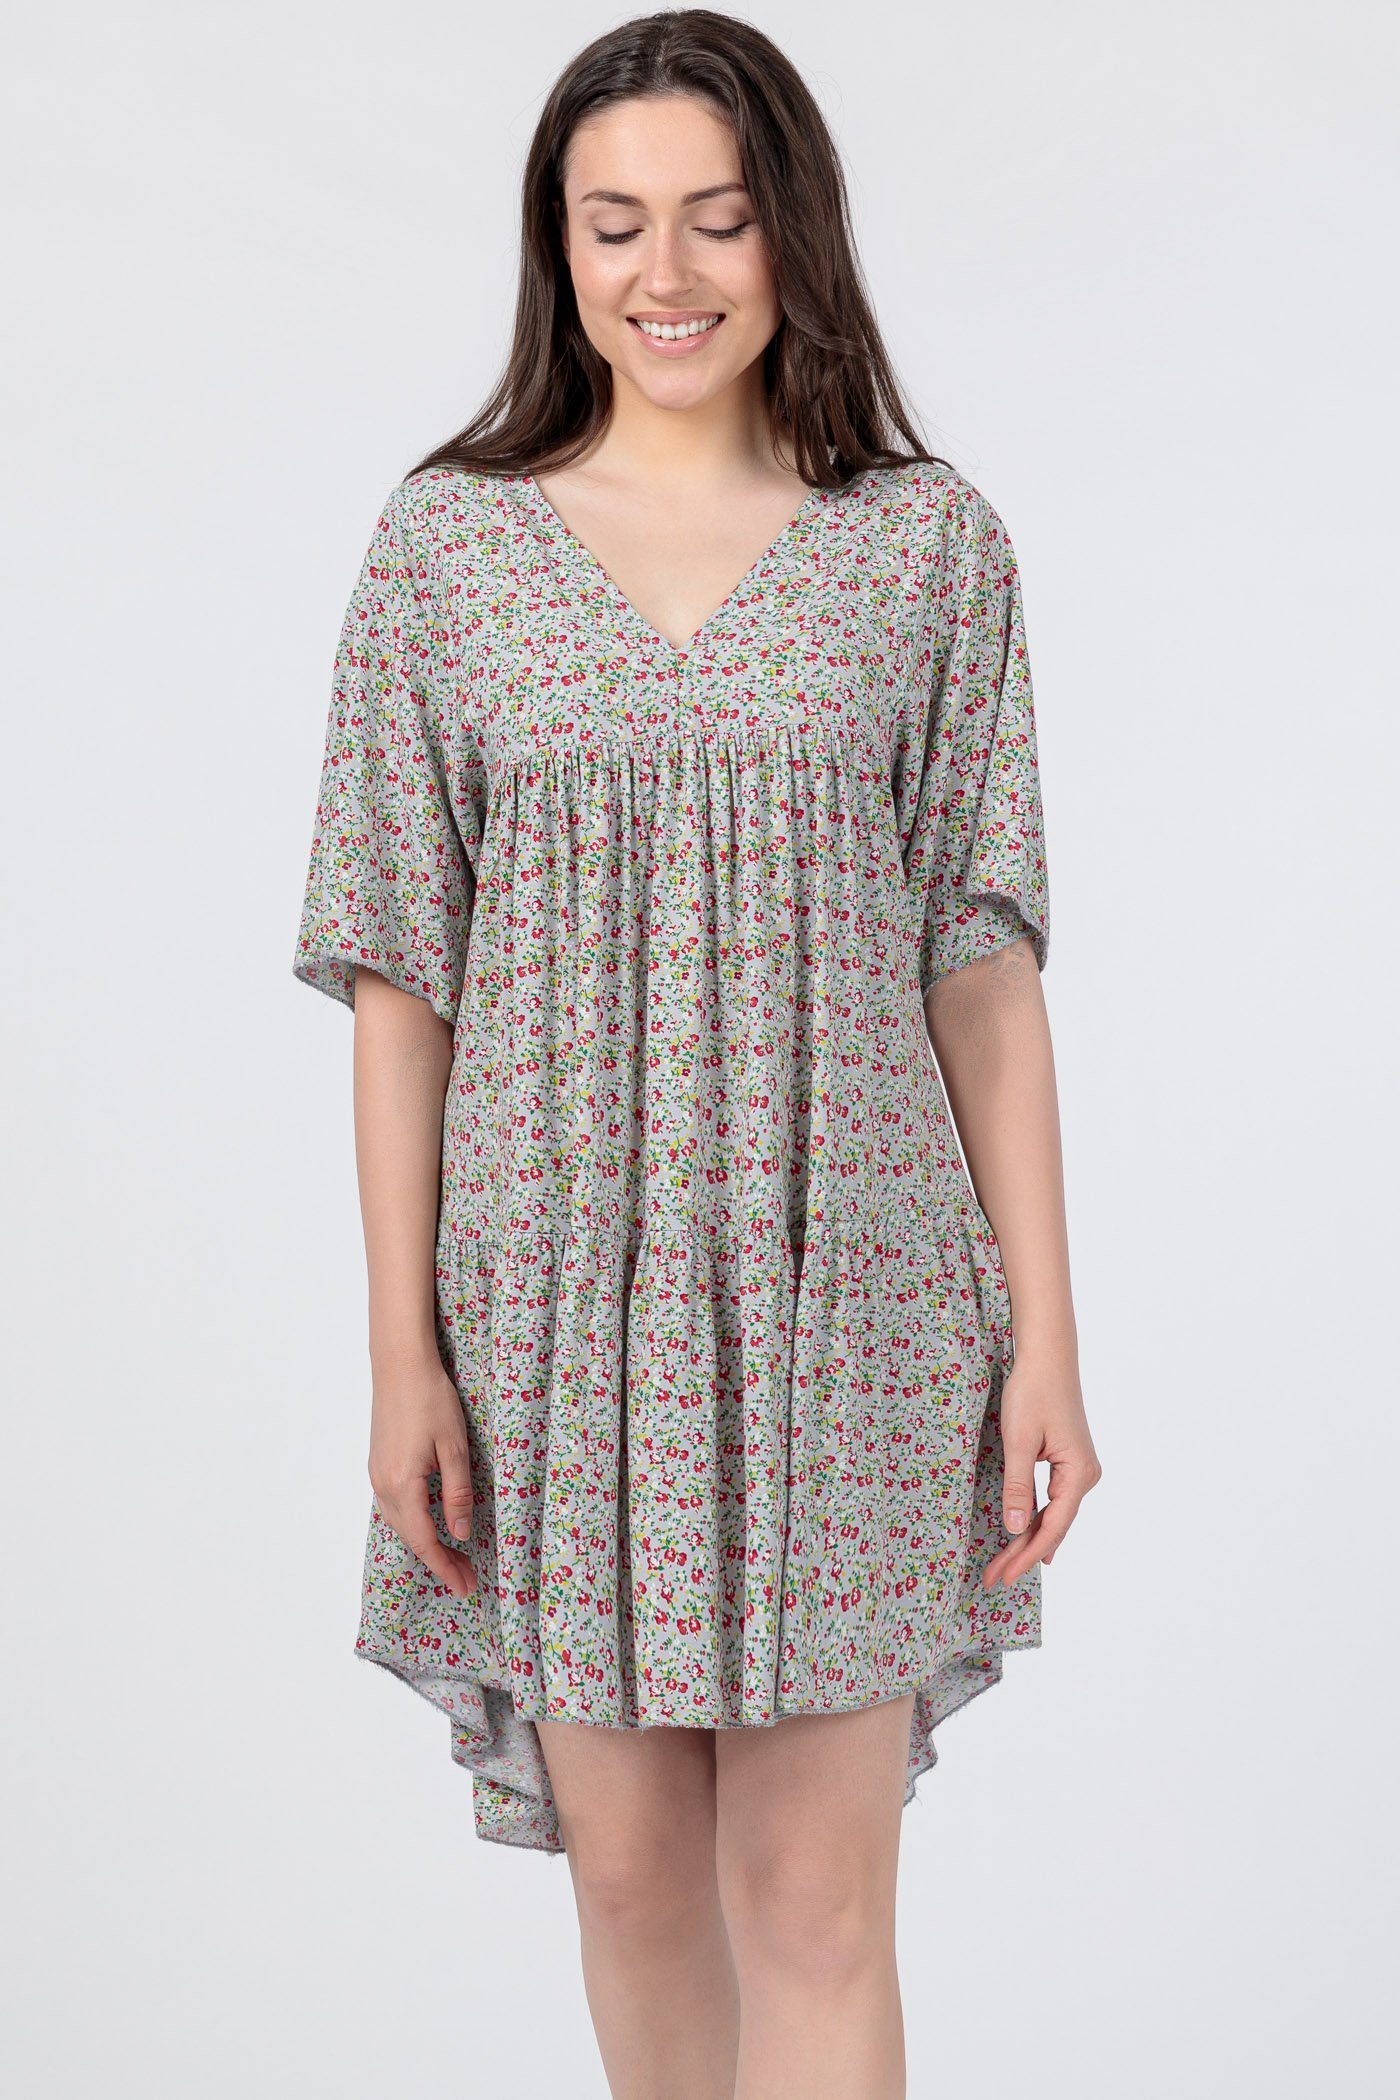 PEKIVESSA Sommerkleid »Boho-Kleid Damen kurz luftig geblümt« Tunika-Kleid  Oversize online kaufen | OTTO